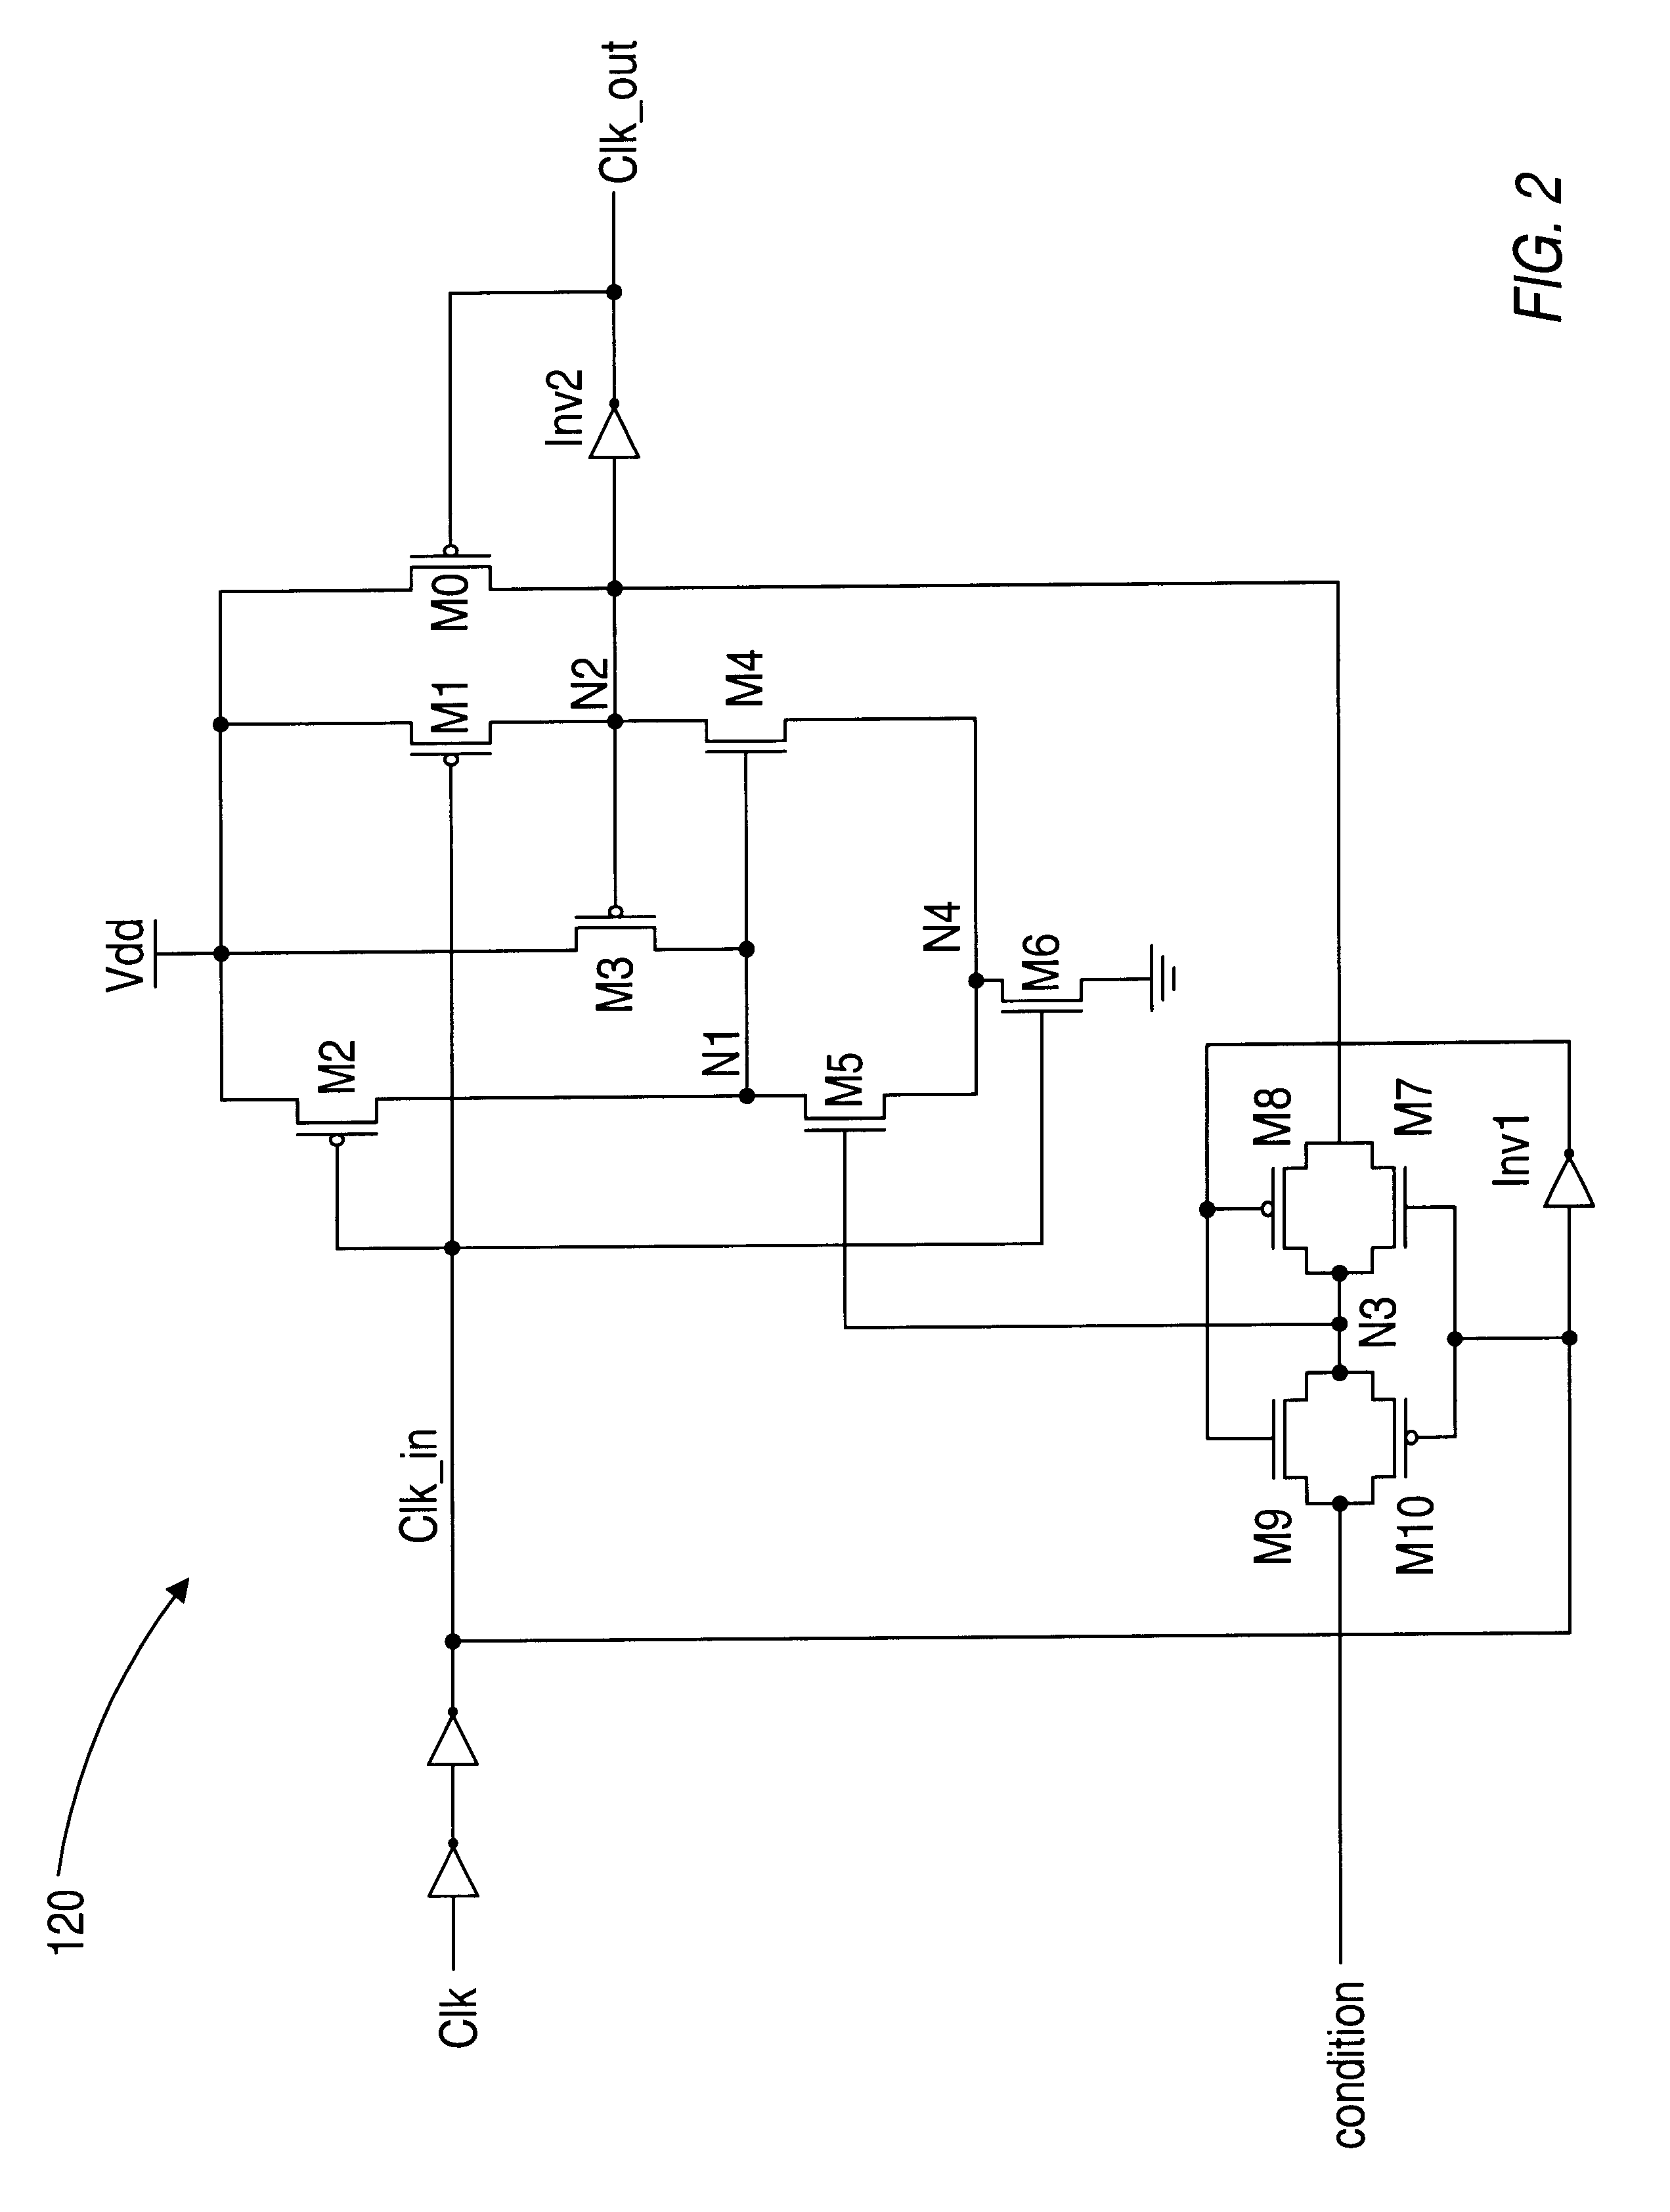 Conditional clock buffer circuit